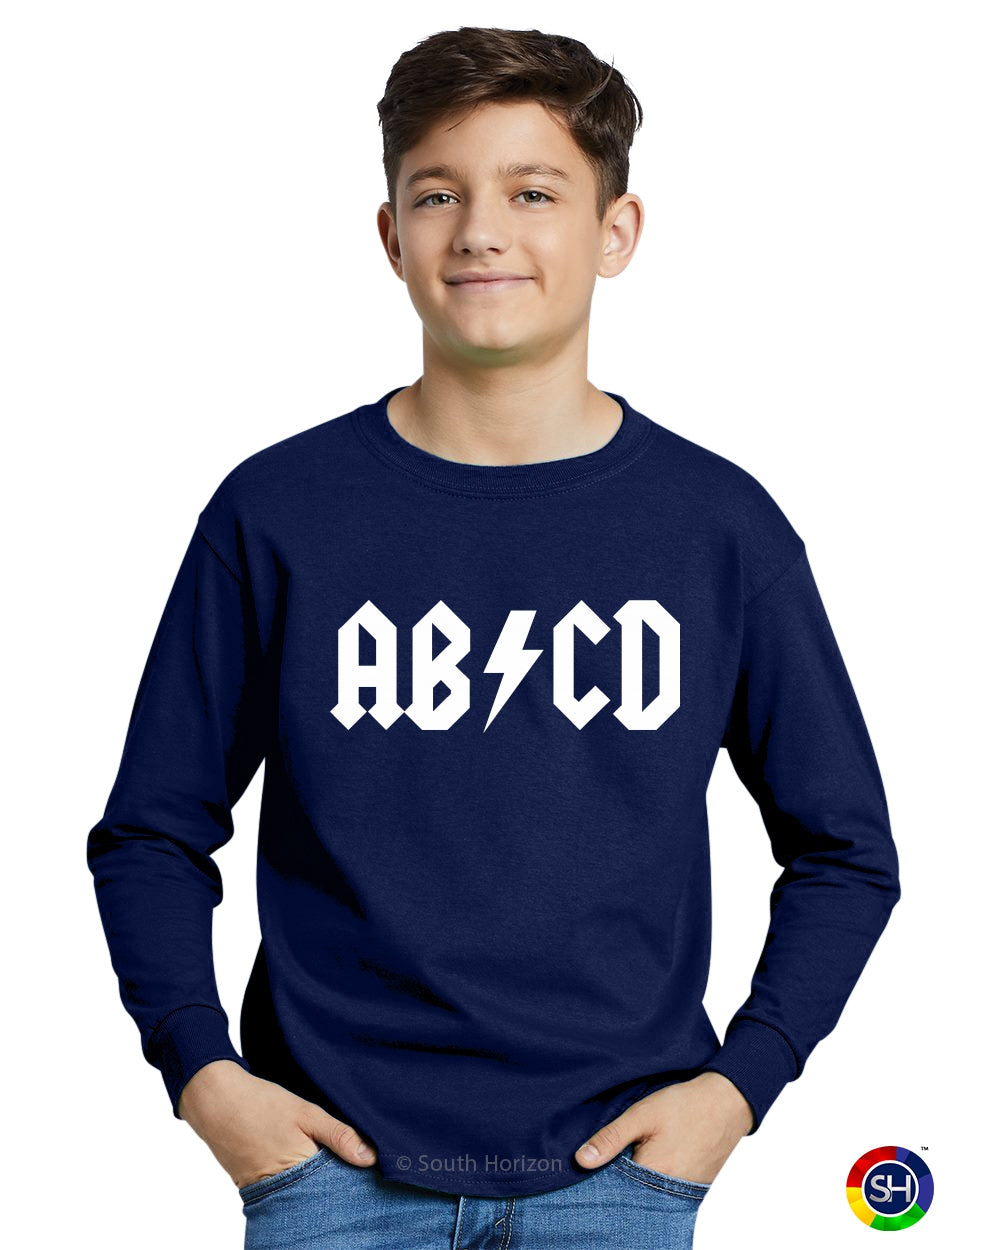 AB/CD on Youth Long Sleeve Shirt (#974-203)